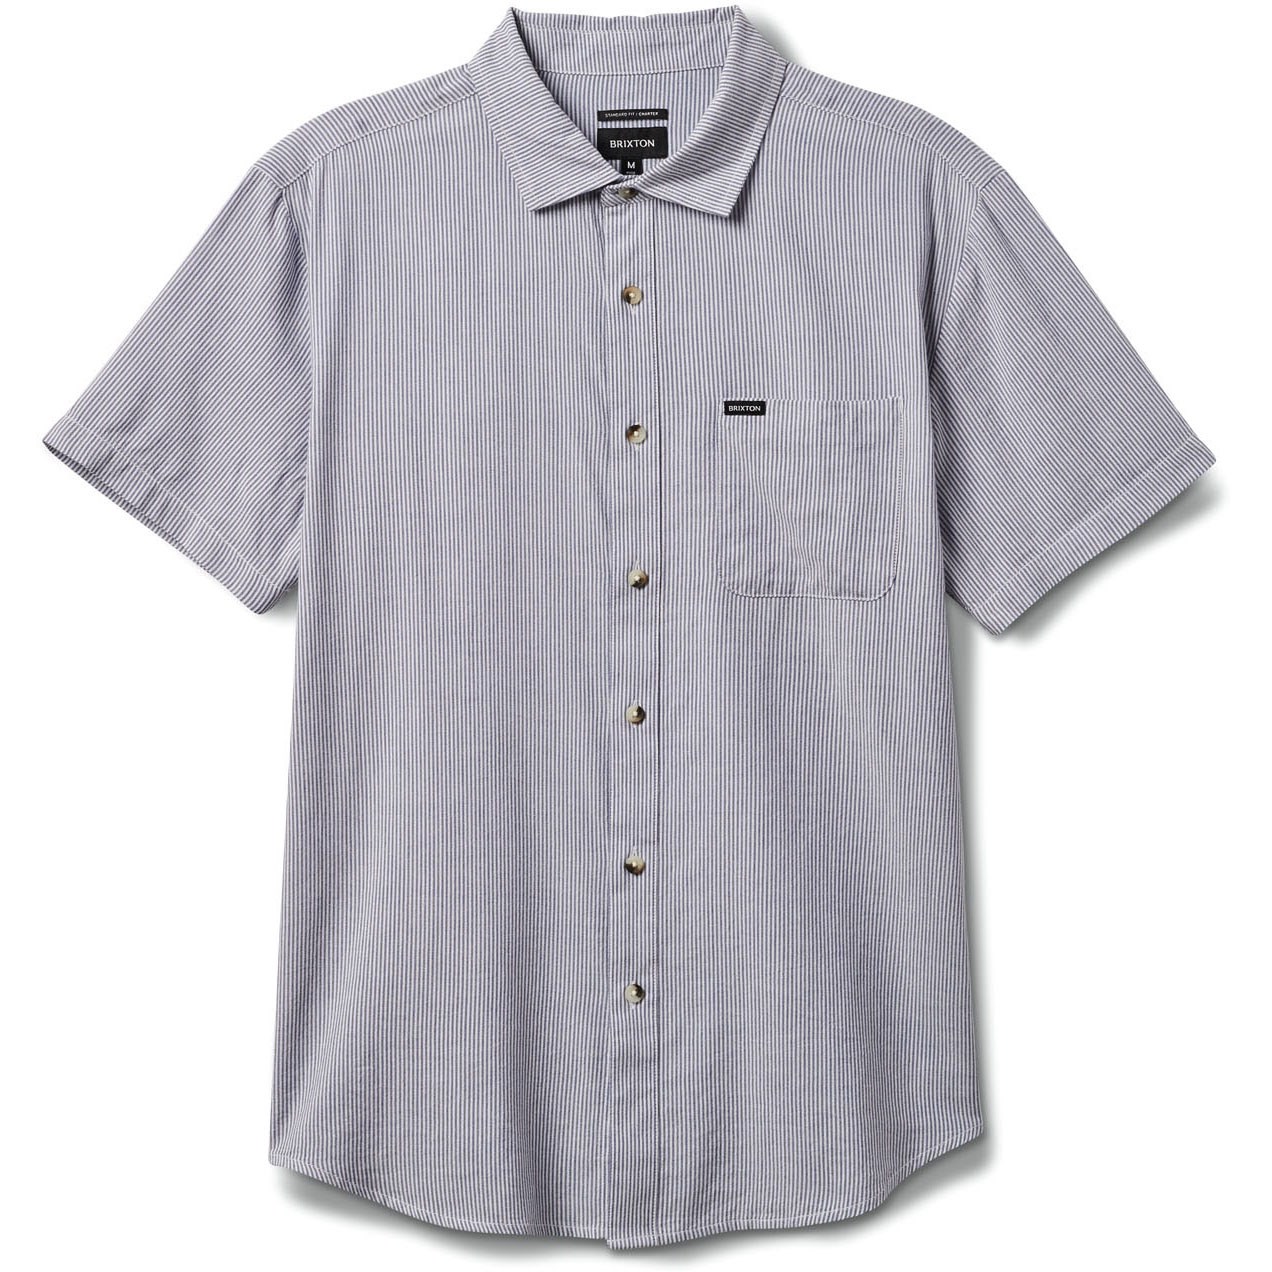 Brixton Charter Stripe Short-Sleeve Shirt | evo